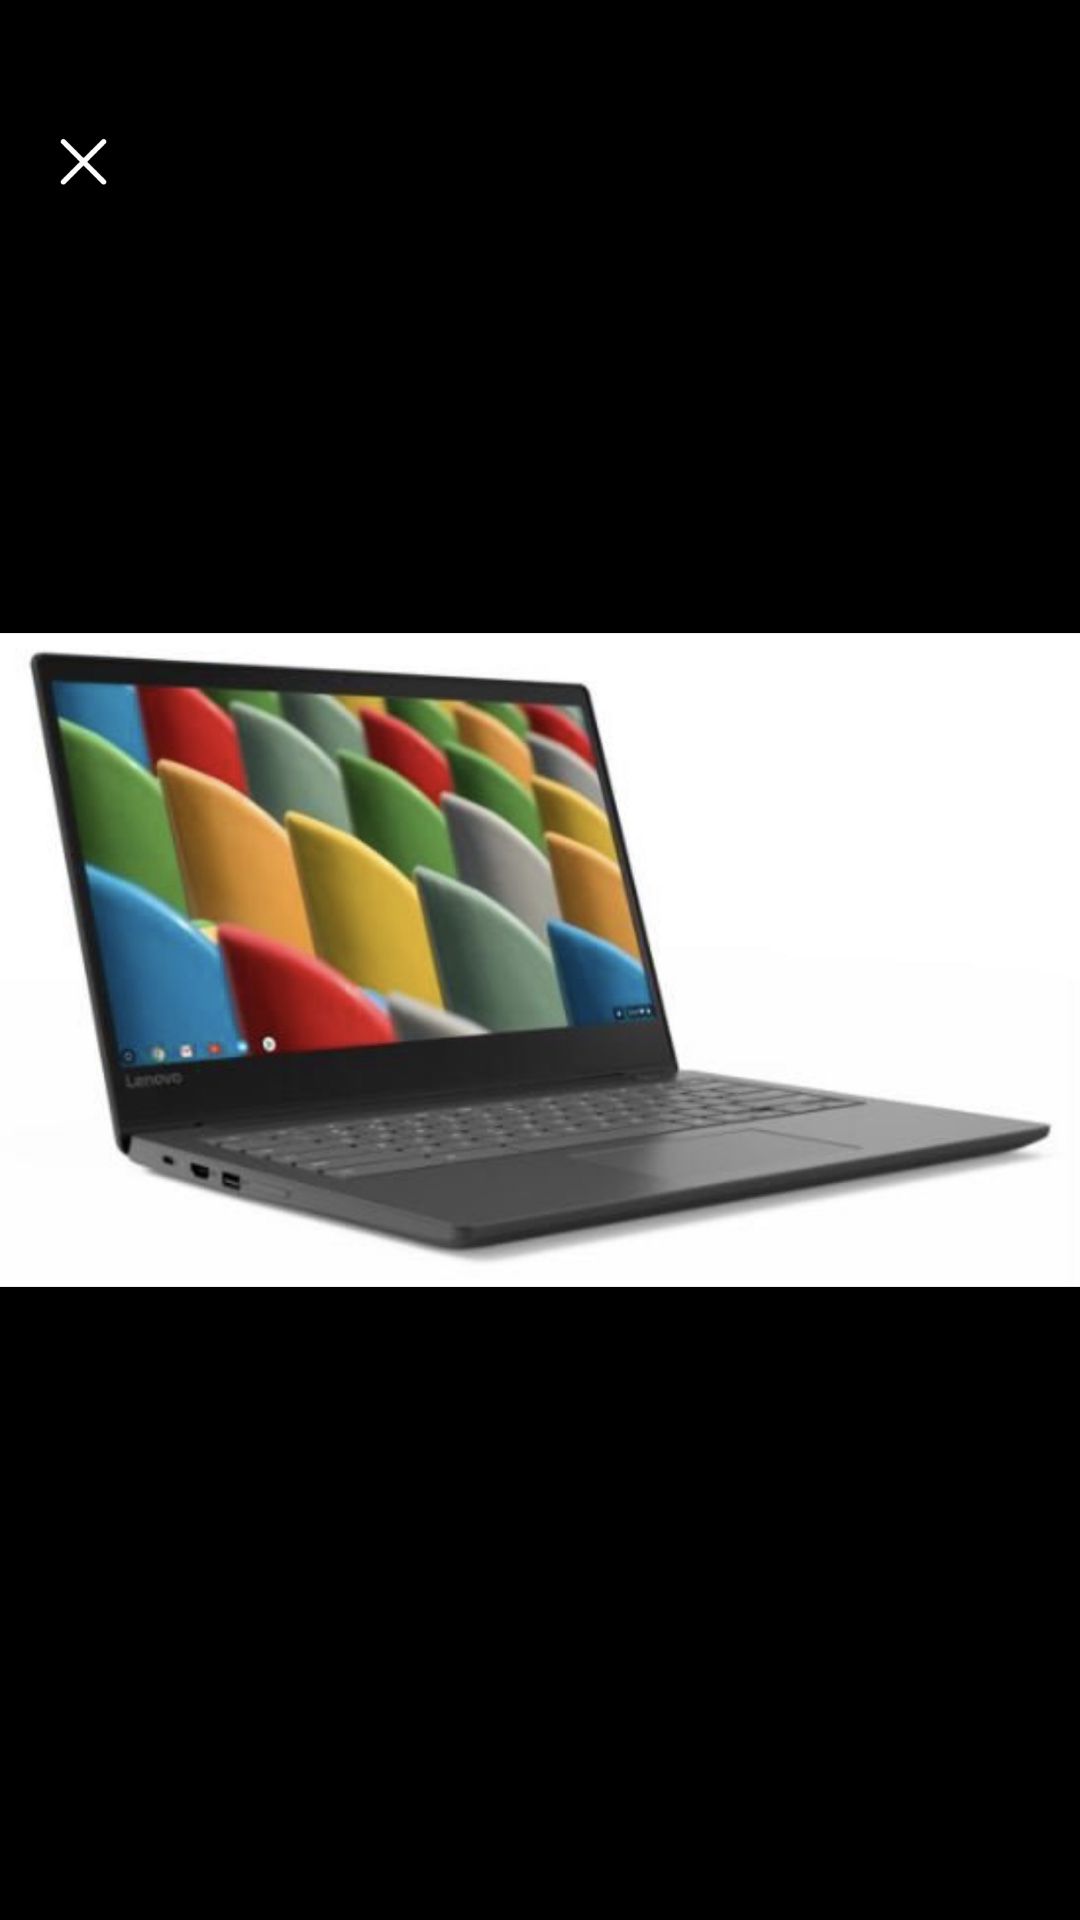 Lenovo Chrome book S330 Brand New Laptop